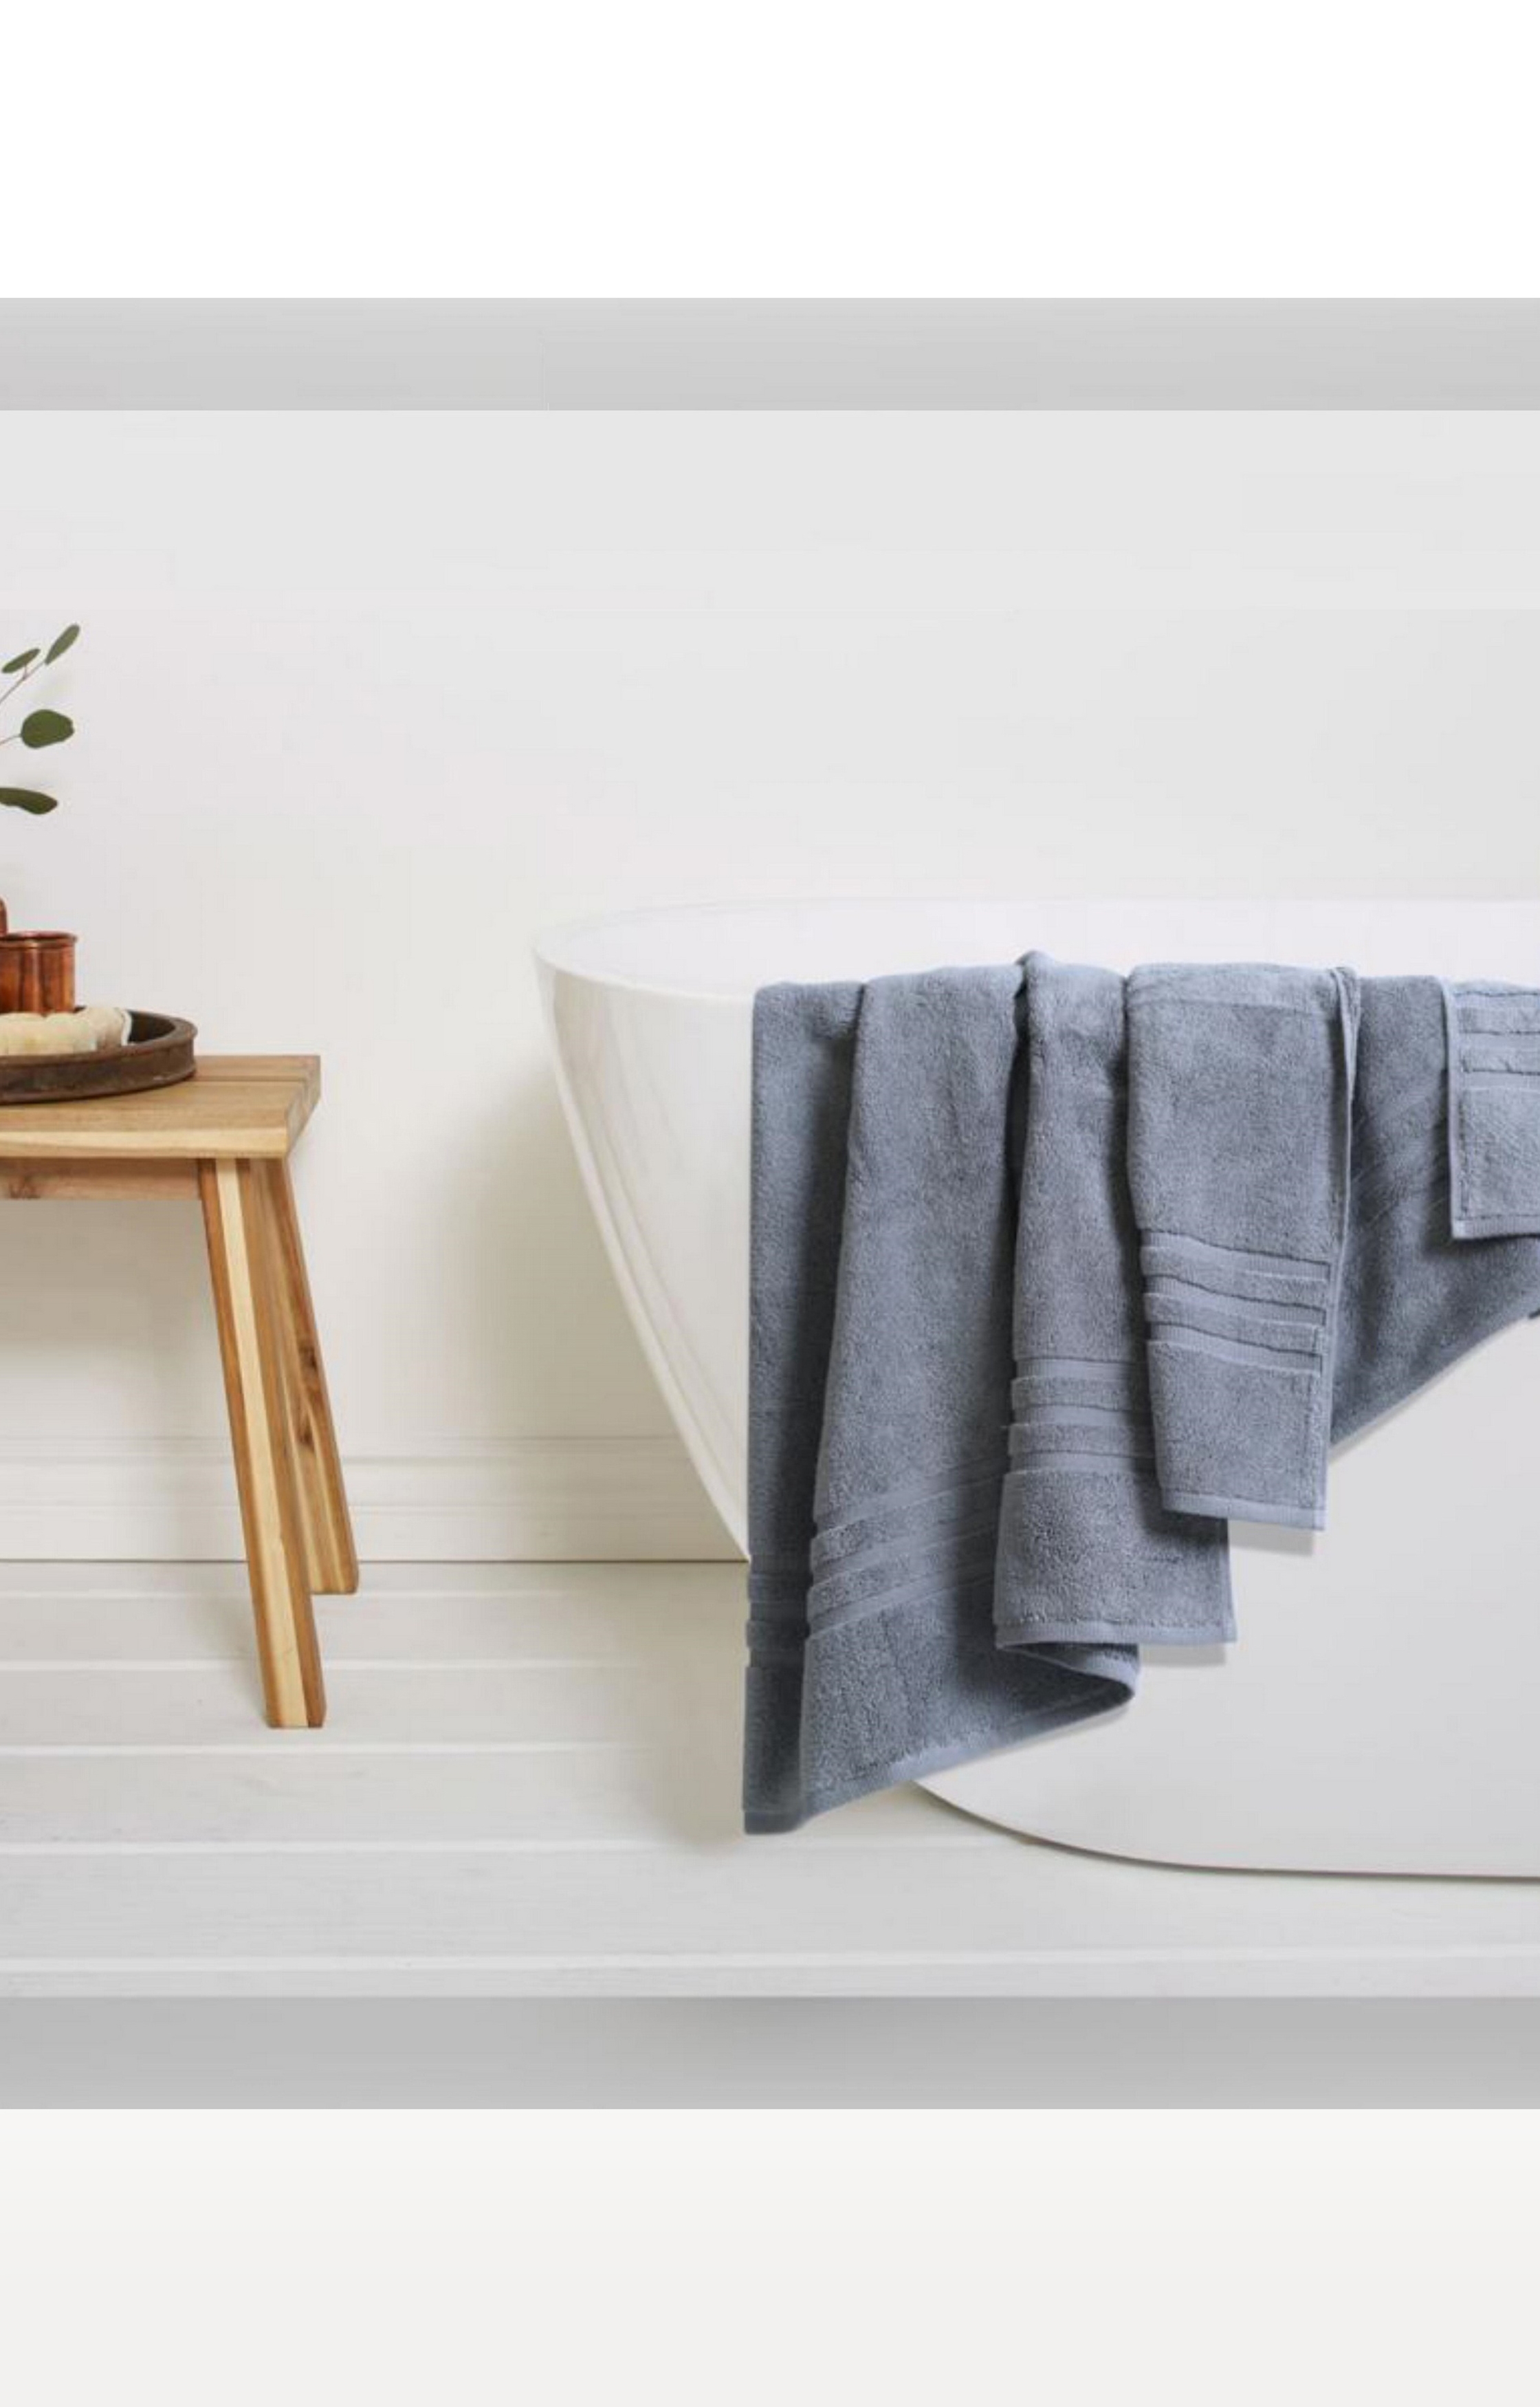 Sita Fabrics | Sita Fabrics Premium Cotton Super Soft Zero Twist Yarn Very Airy 600 GSM Bath Towel - Grey